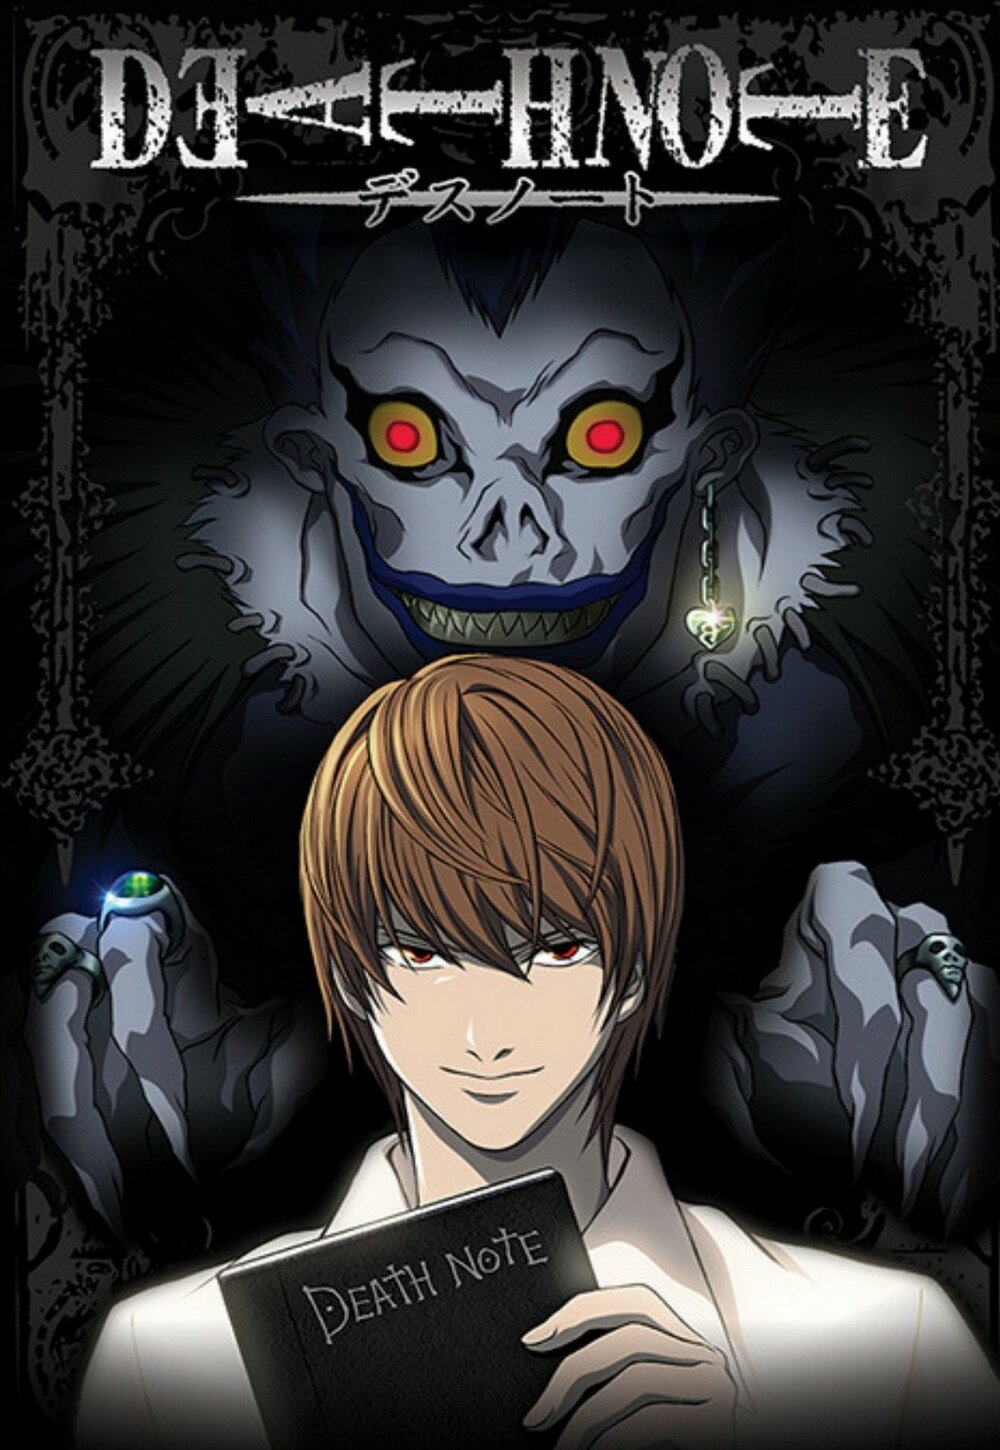 Death Note Misa L anime Poster | eBay